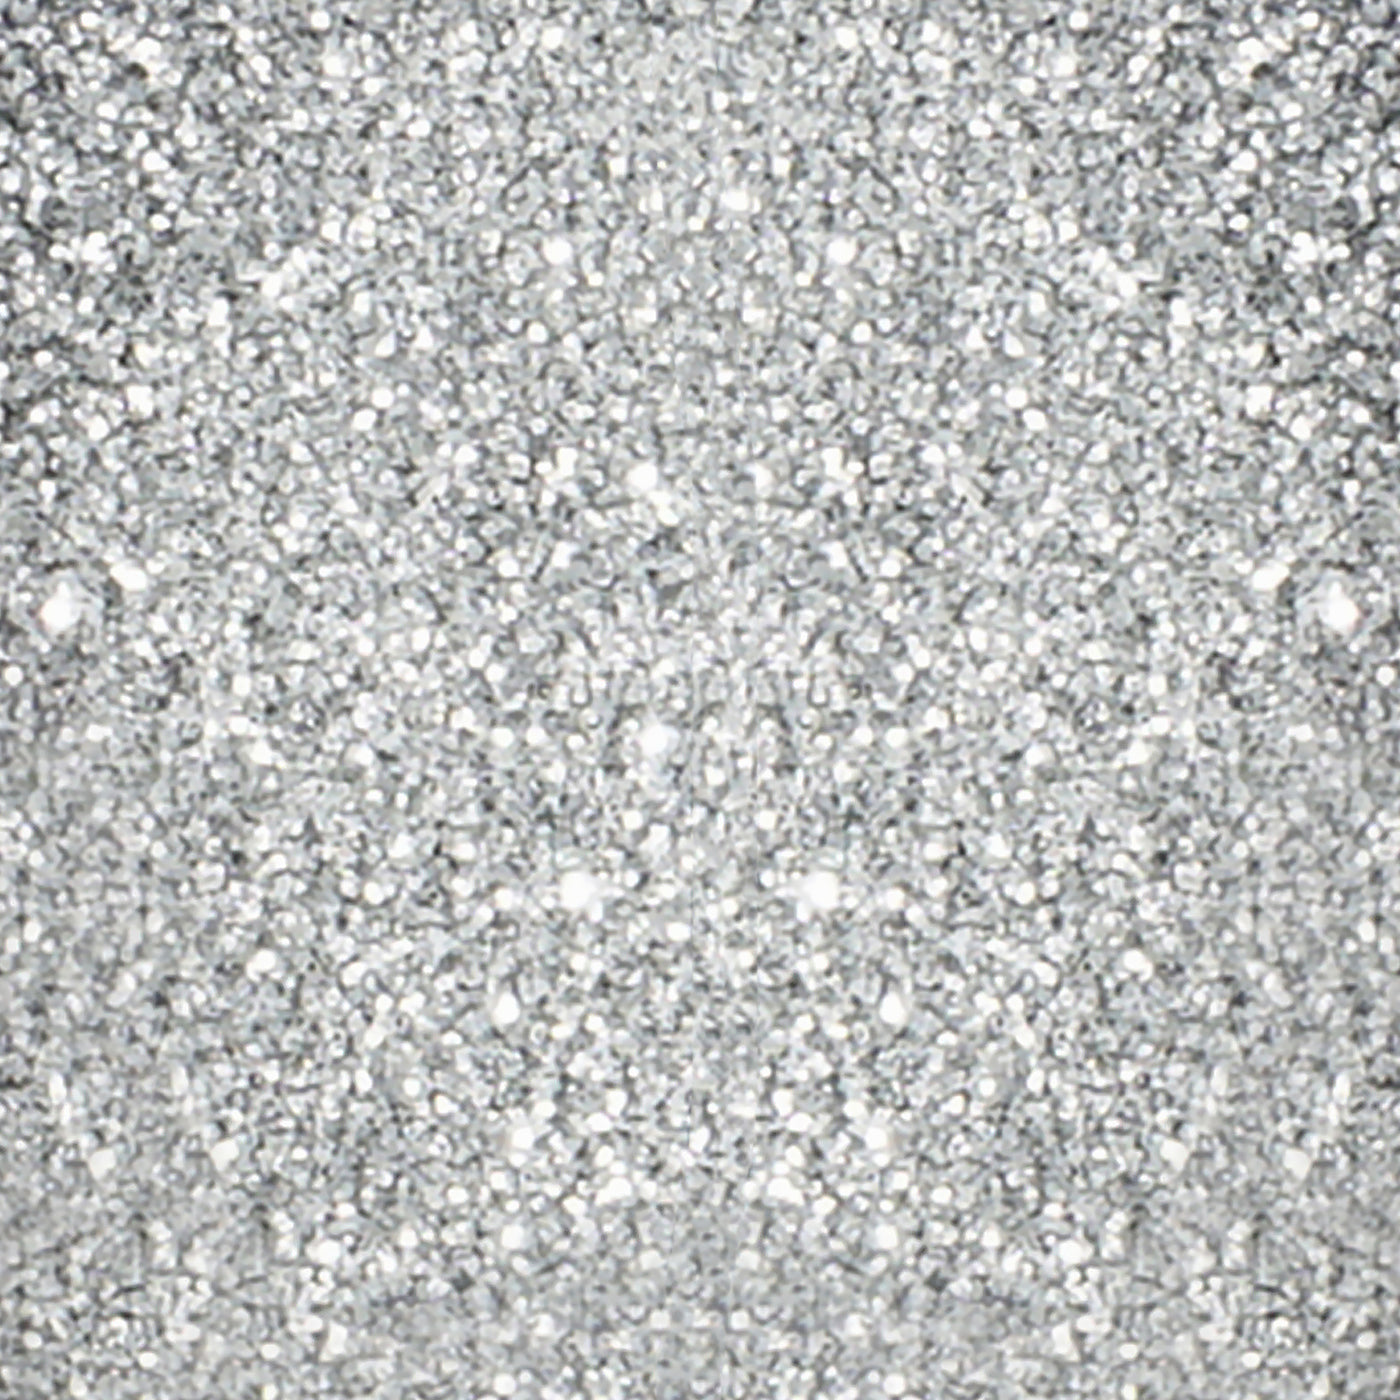 Silver Biodegradable Cosmetic Glitter – Craftastik